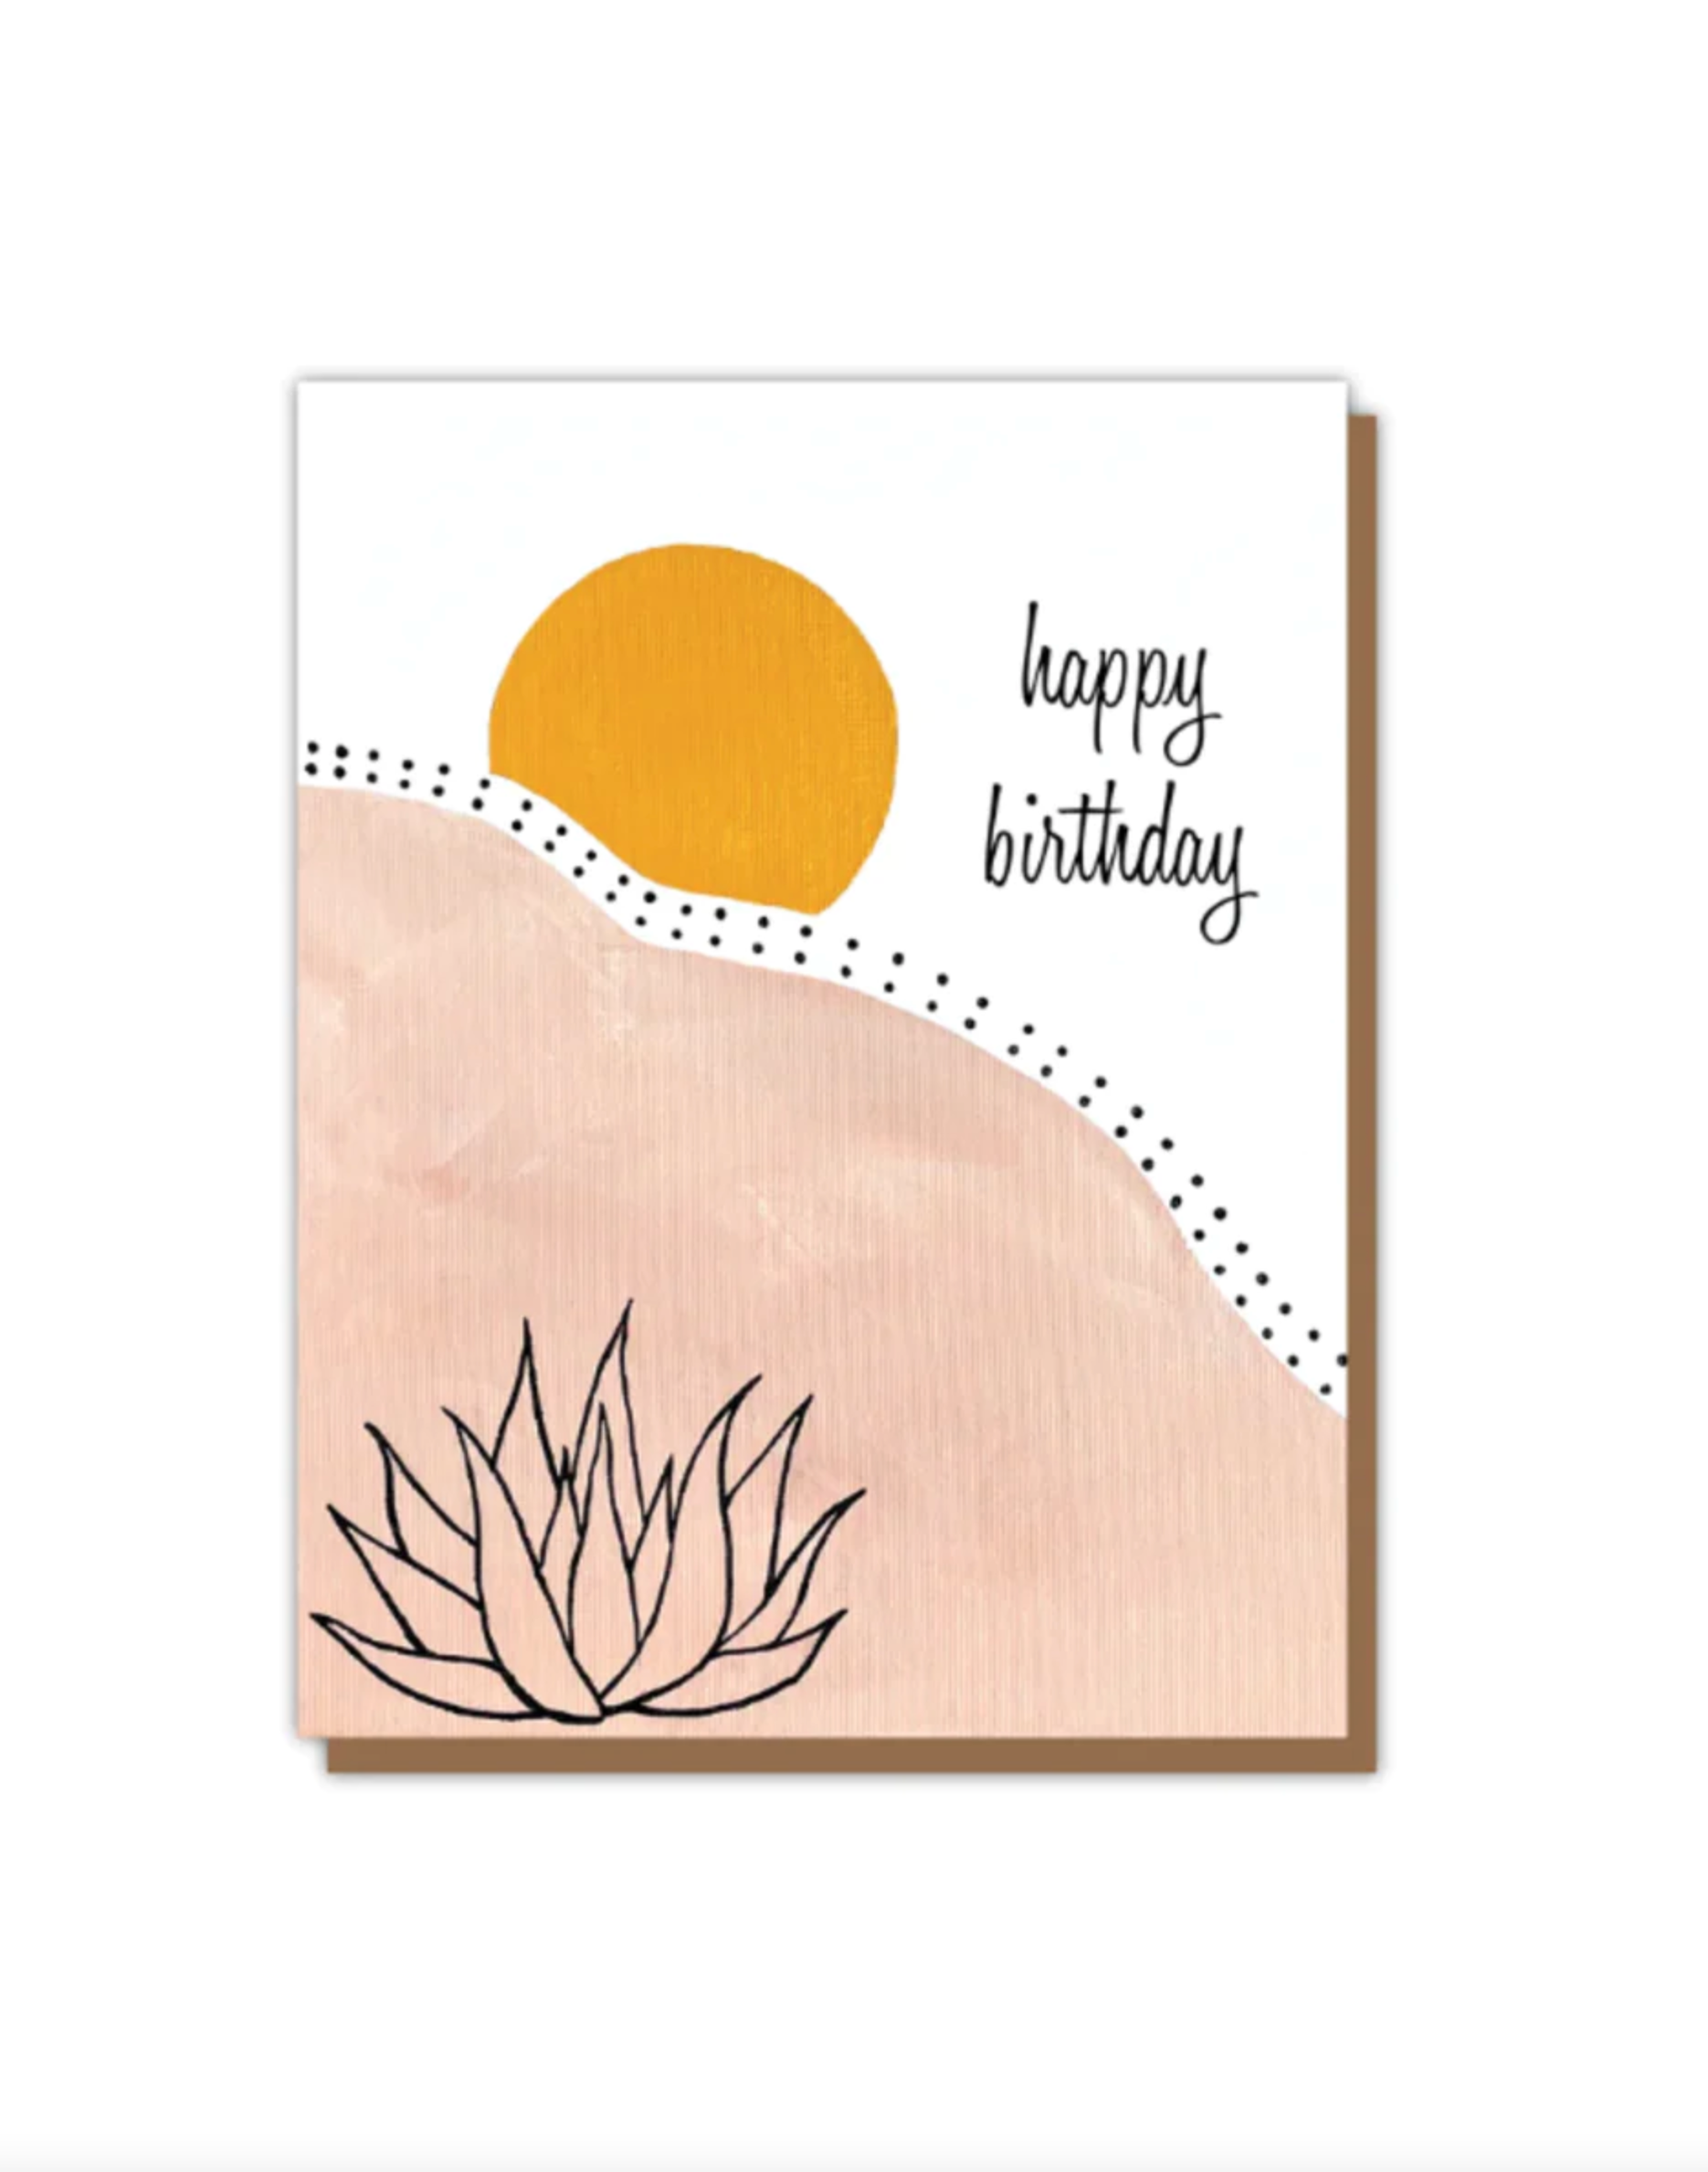 "Happy birthday" dessert painting card by Teluna